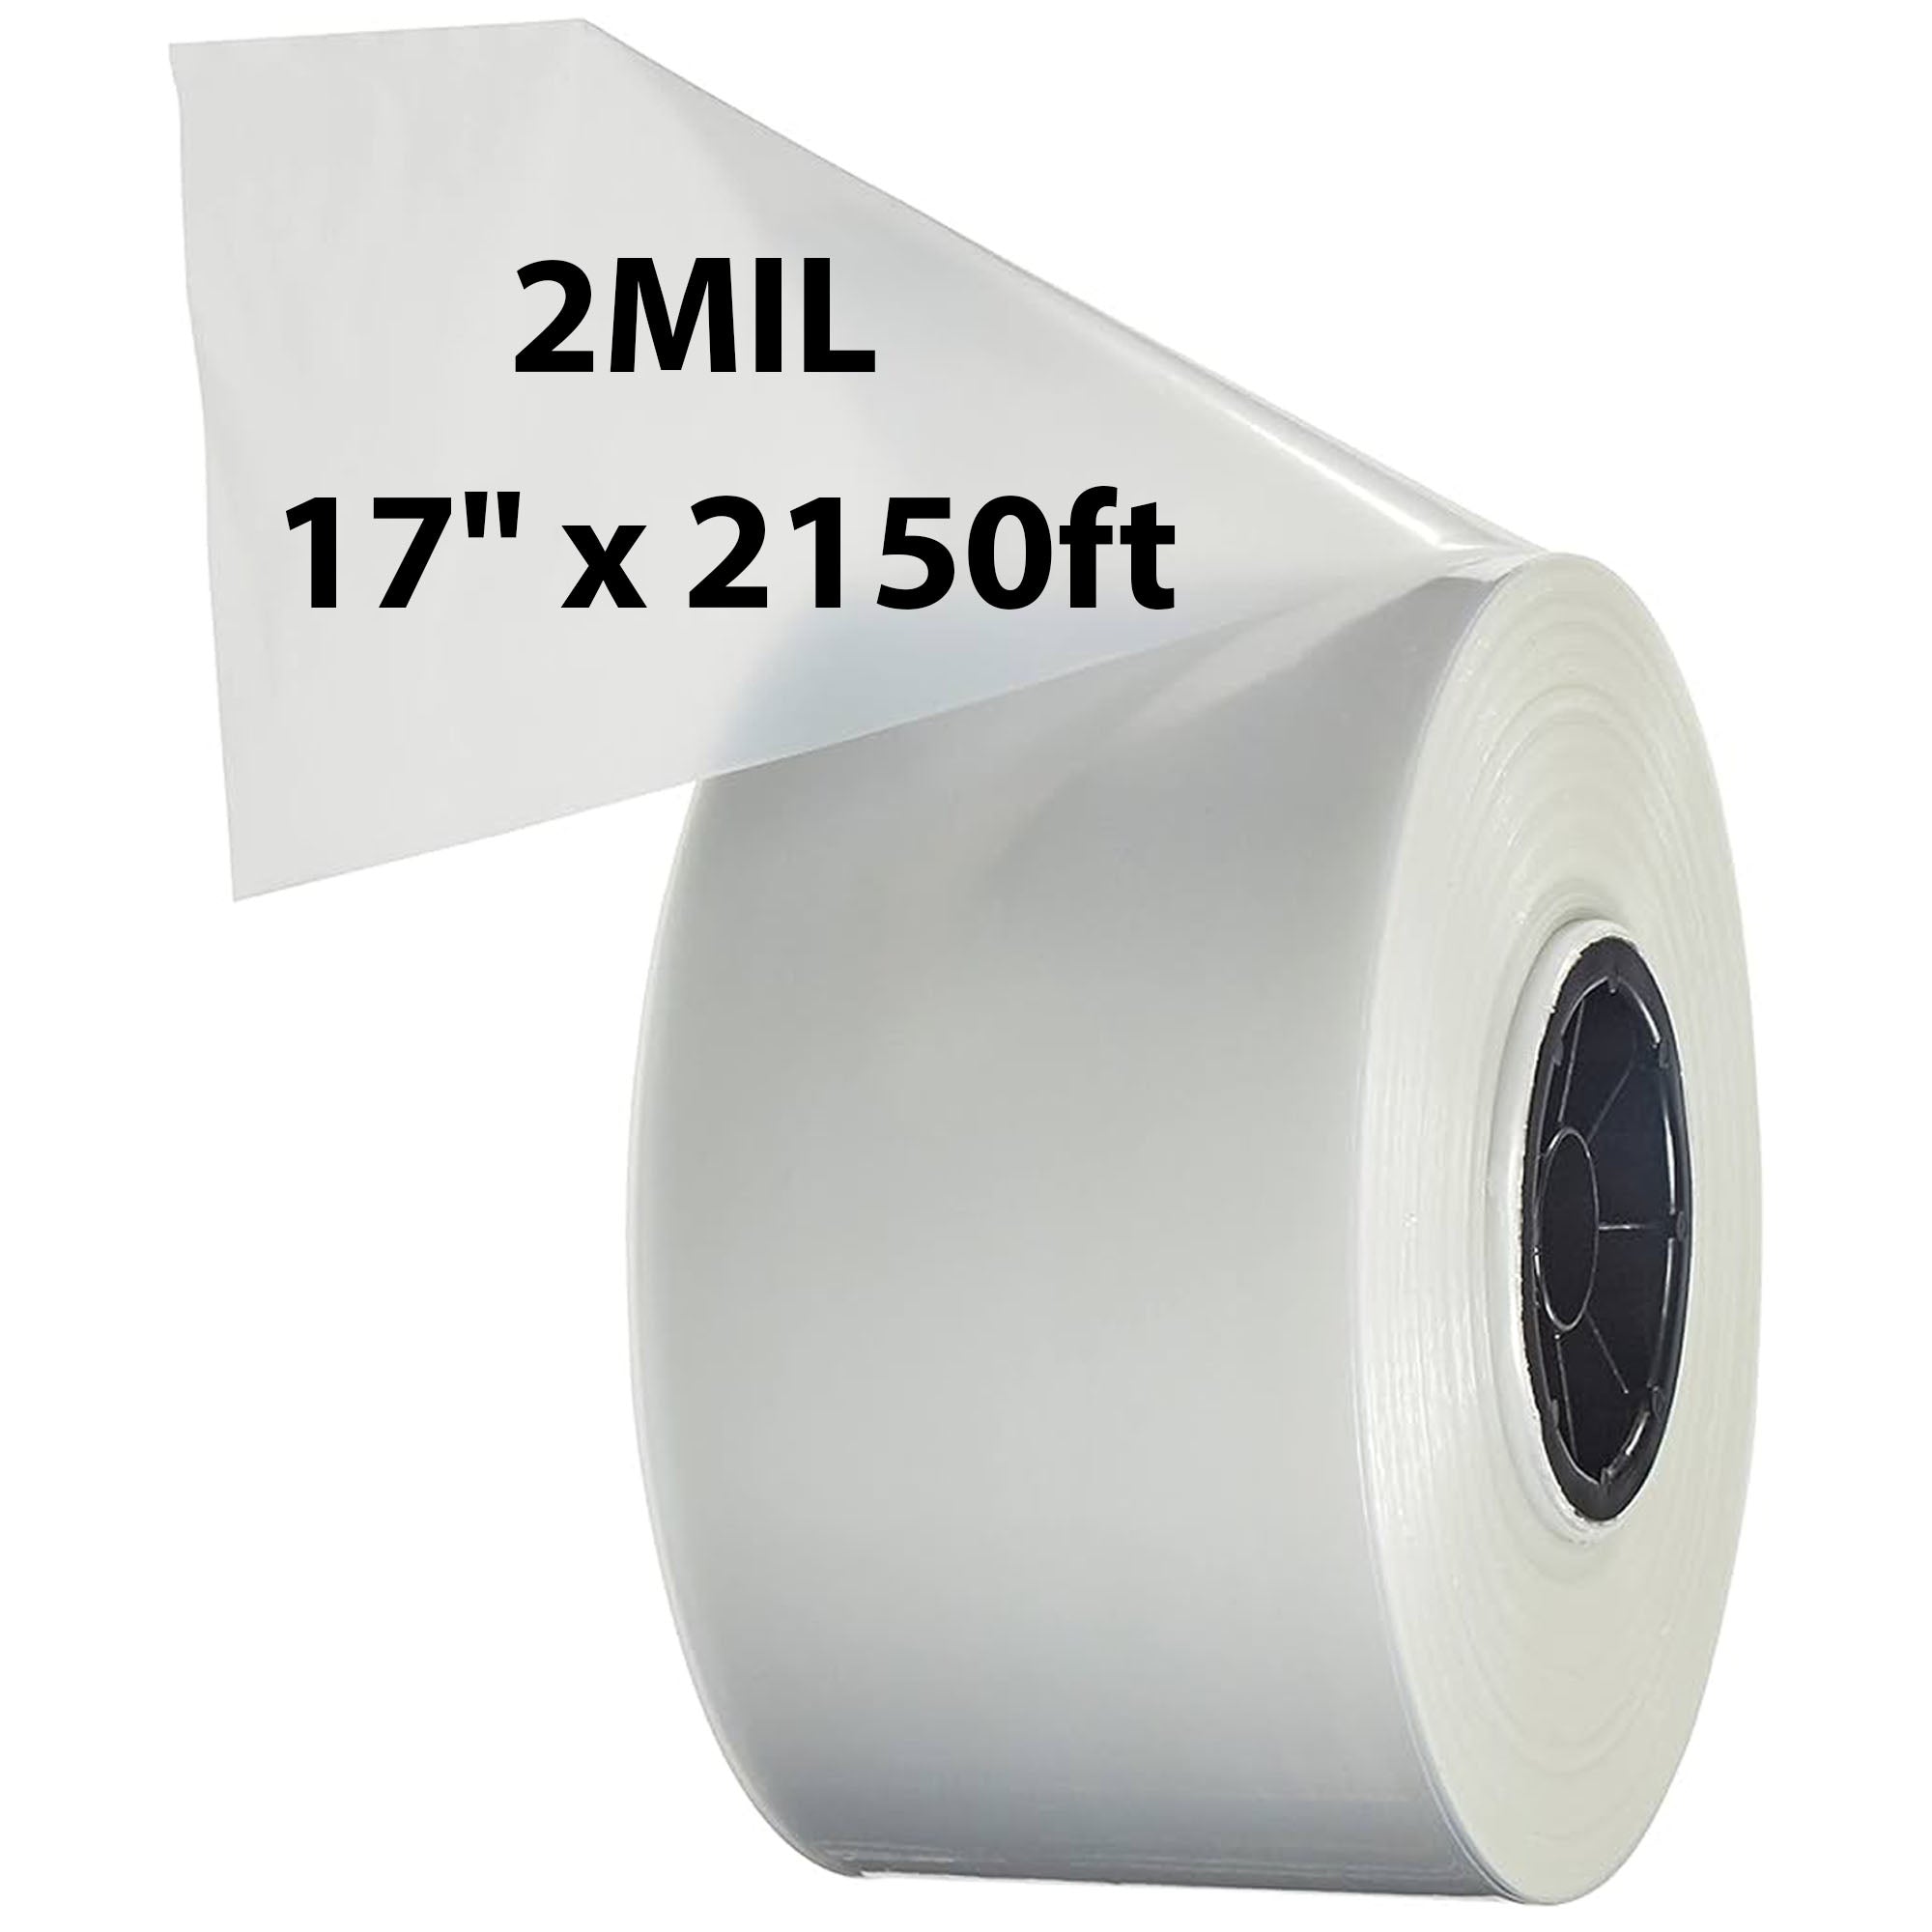 Food Grade Poly Tubing Roll Bags 2Mil 17x2150ft- Impulse Heat Sealer